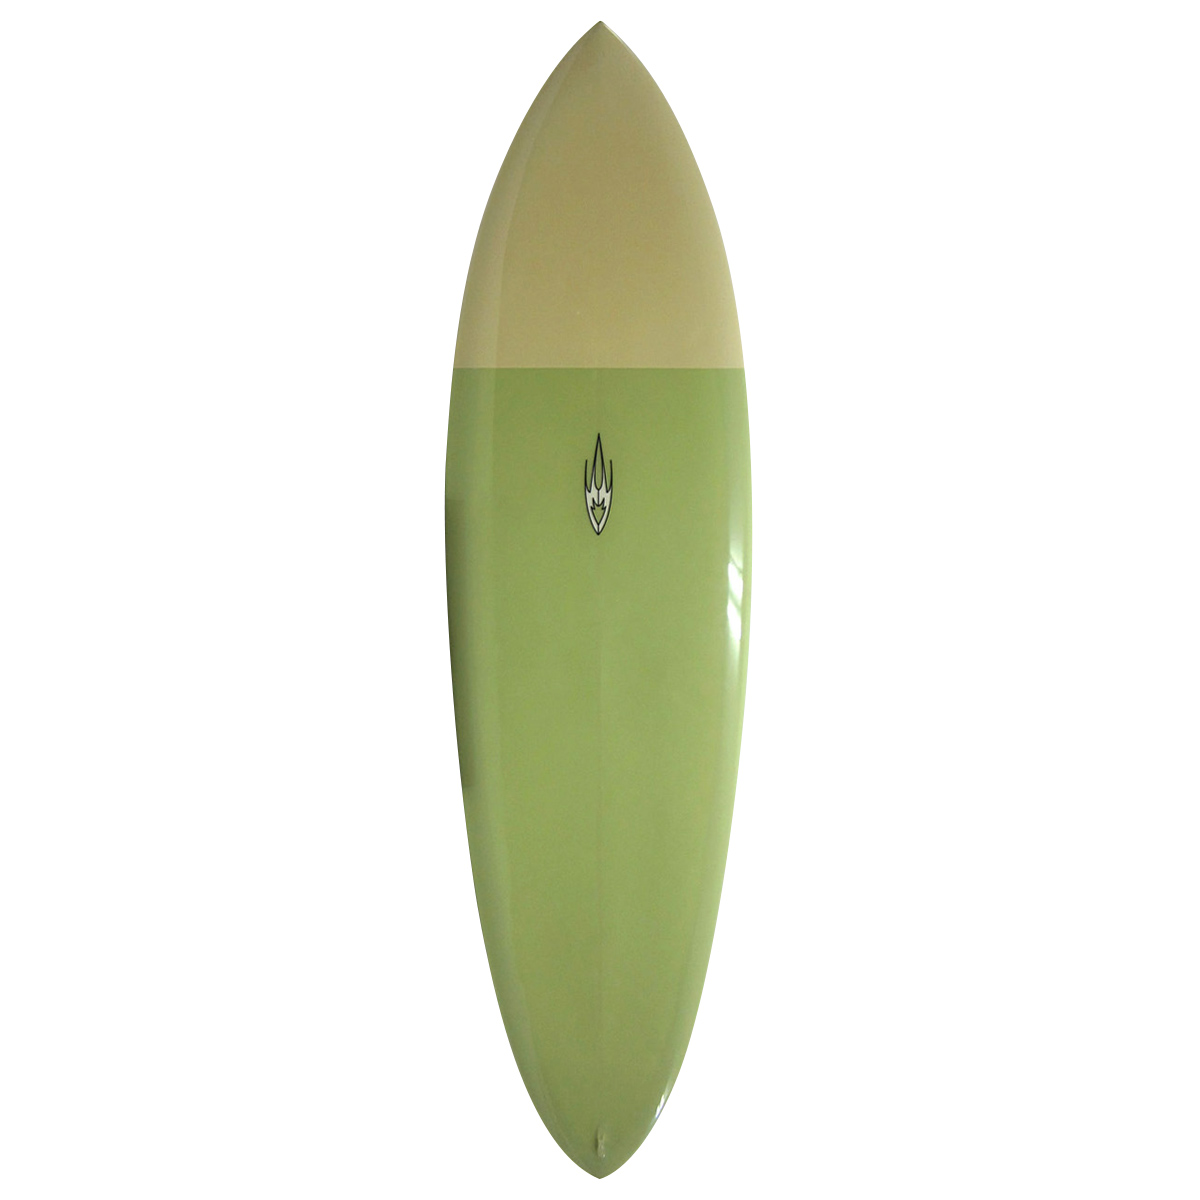 Michael Miller Surfboards / 6`6 Michael Miller Personal Boards